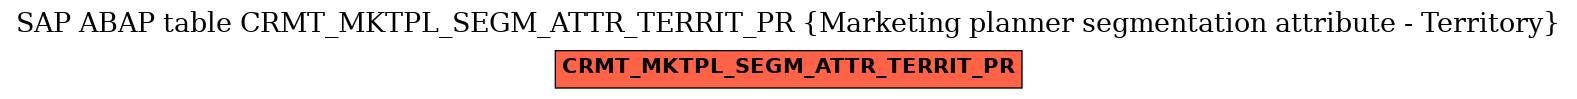 E-R Diagram for table CRMT_MKTPL_SEGM_ATTR_TERRIT_PR (Marketing planner segmentation attribute - Territory)